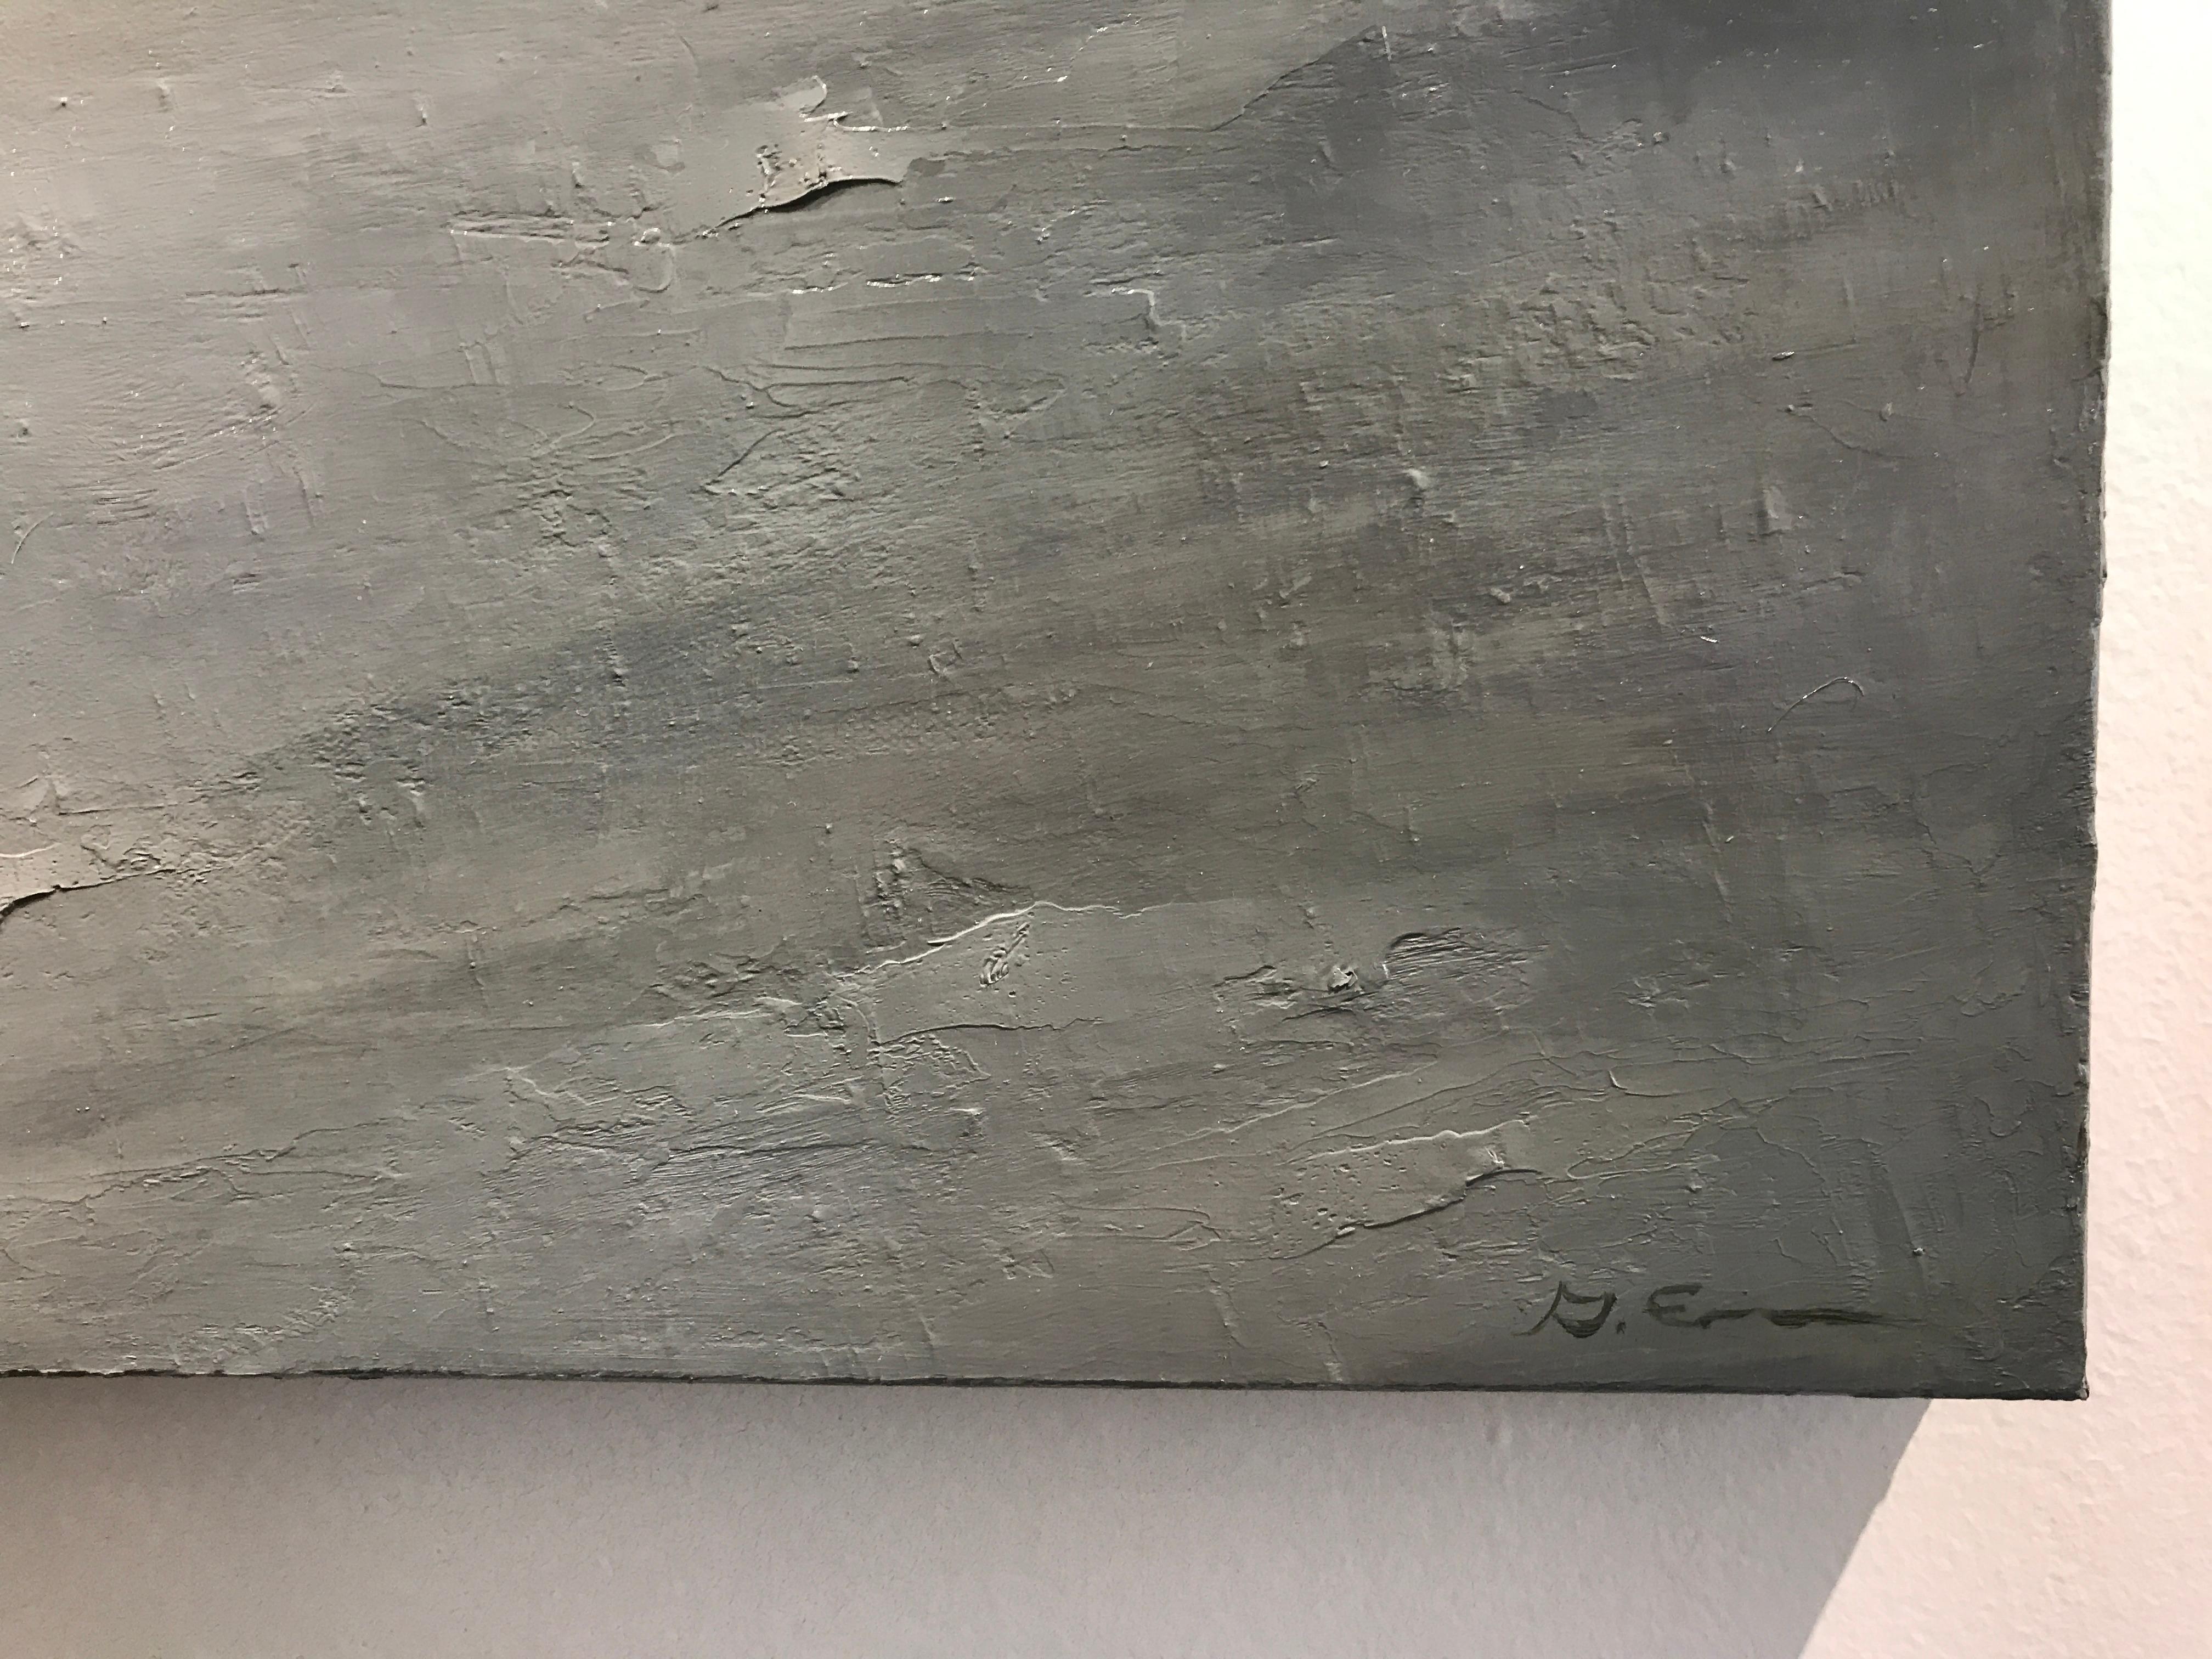 Morning Stillness, Geri Eubanks 2018 Oil on Canvas Grey Landscape Painting 5